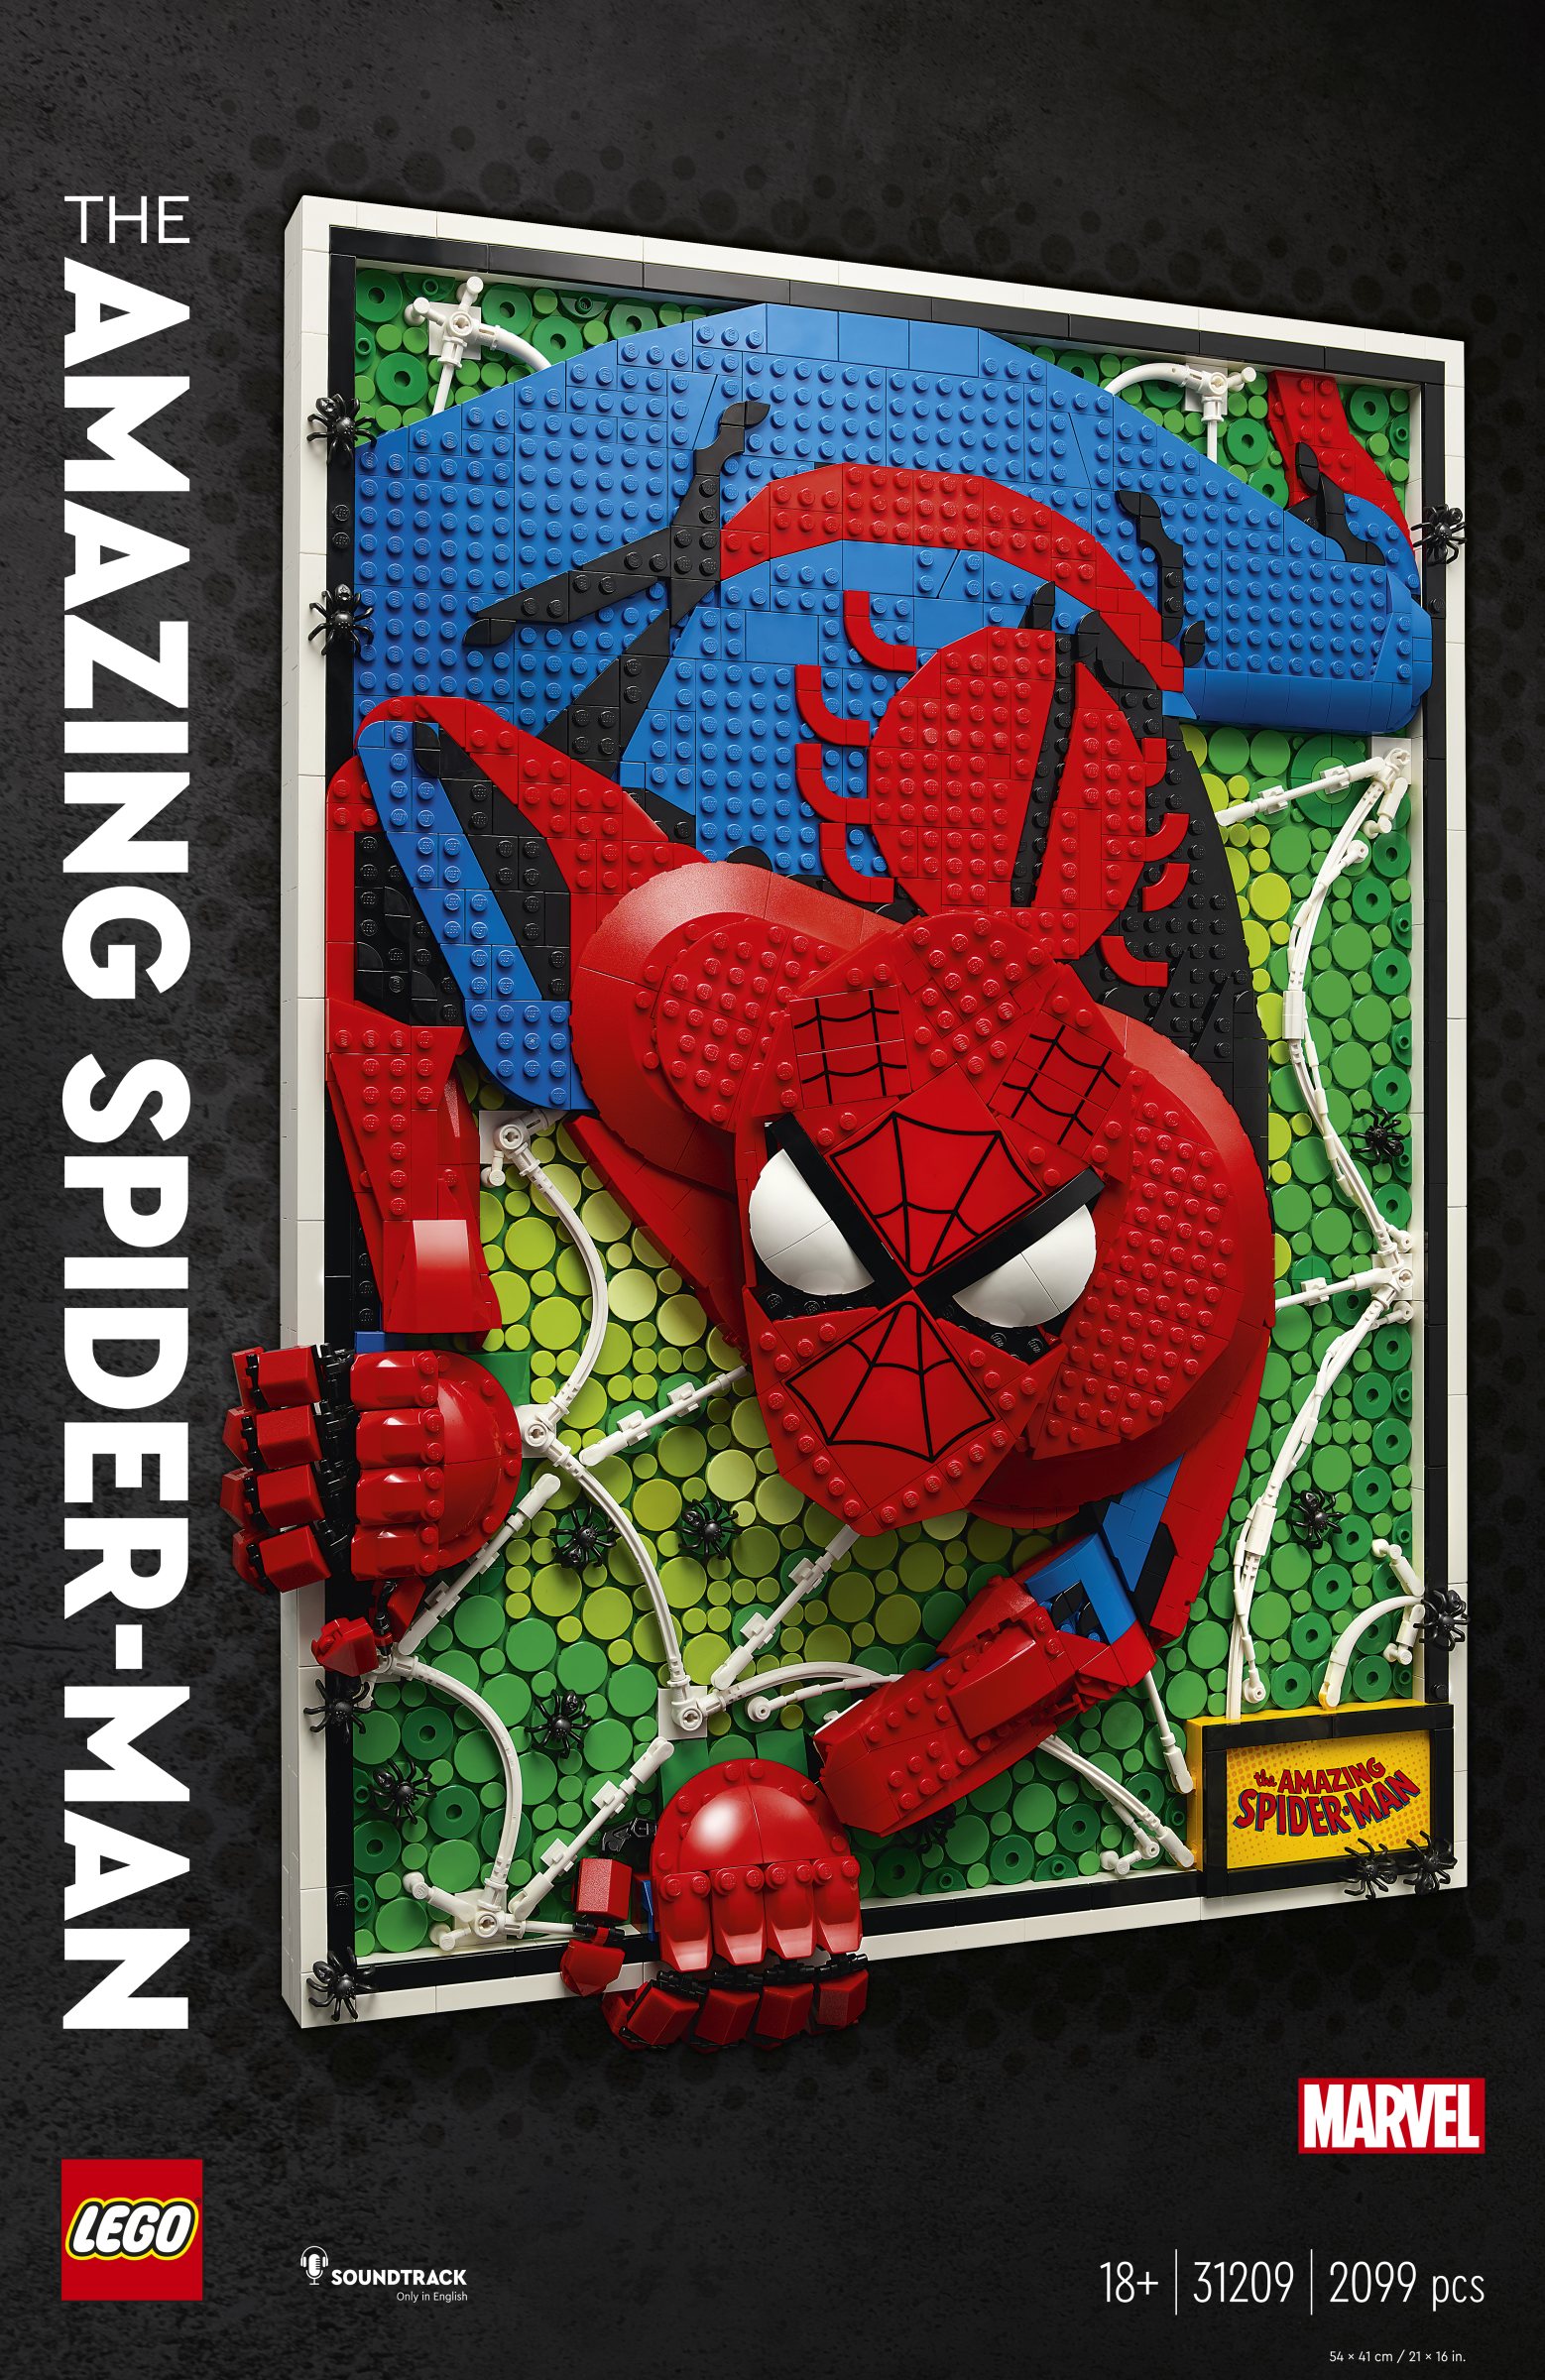 Spider-Man Art set revealed!